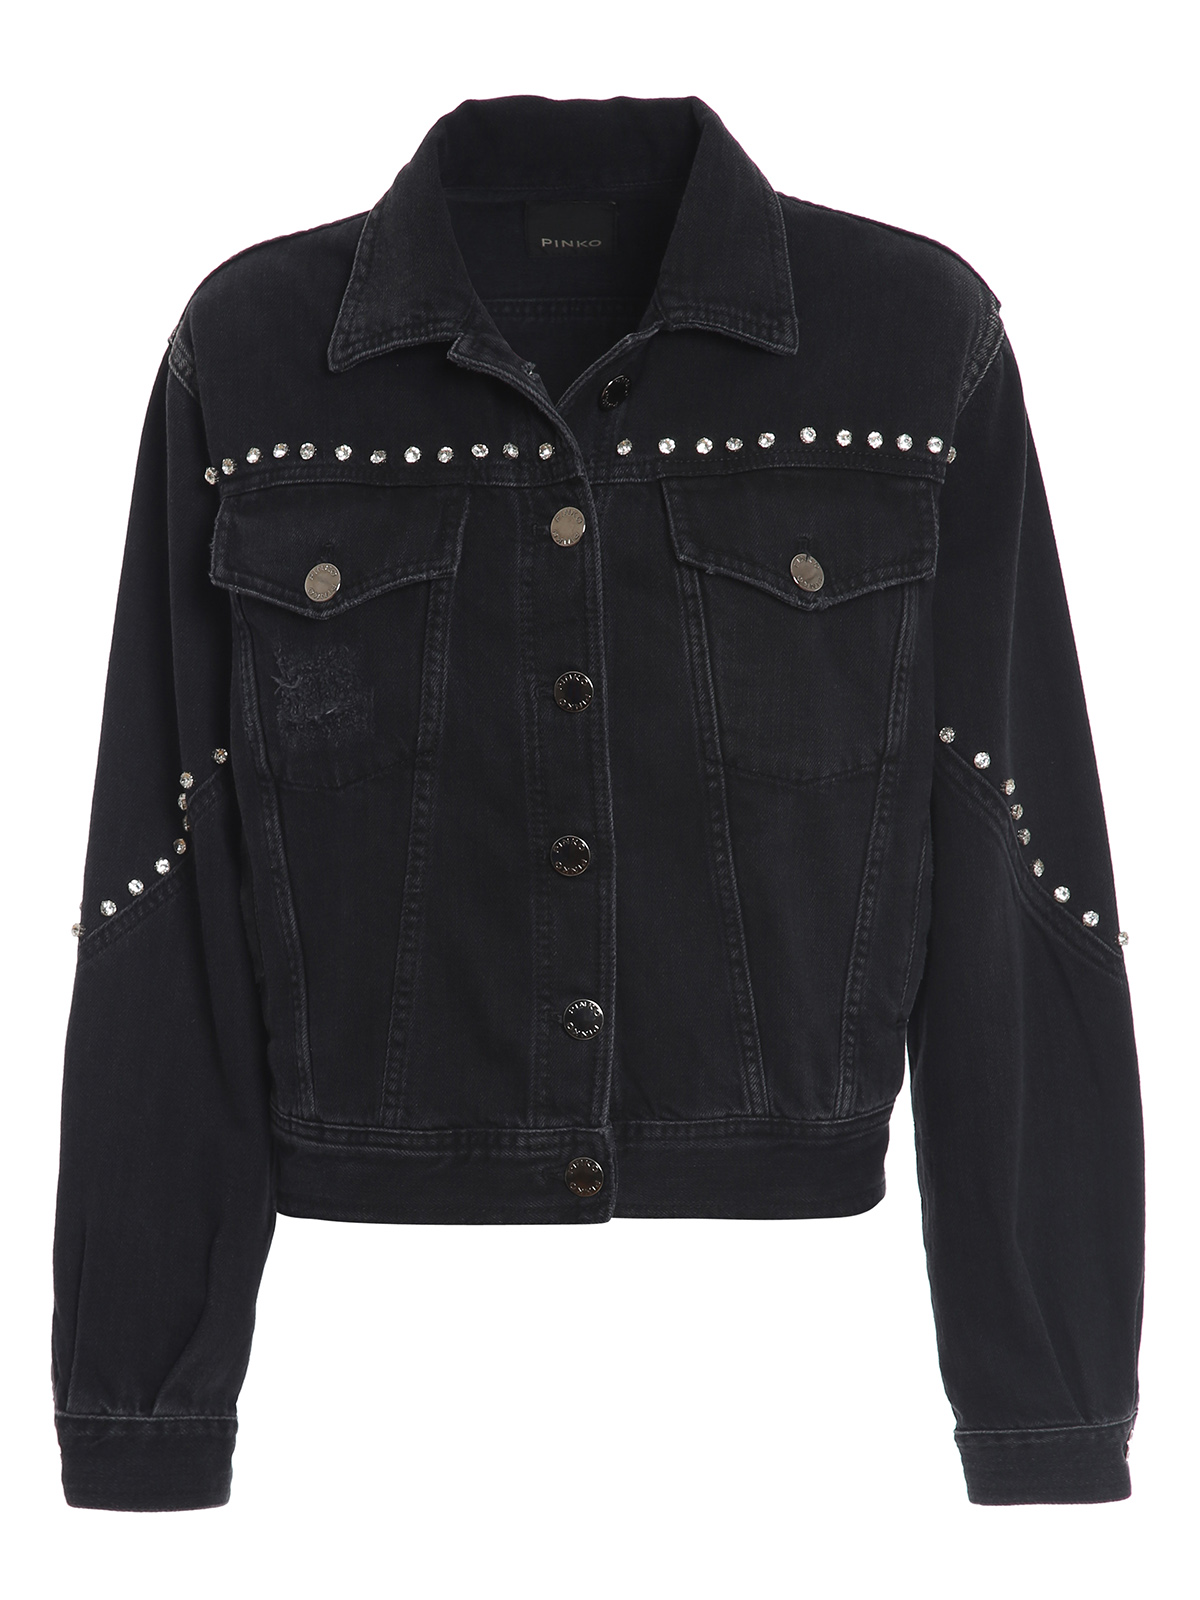 Denim jacket Pinko - Dora jacket - 1J1HPY647 | Shop online at iKRIX